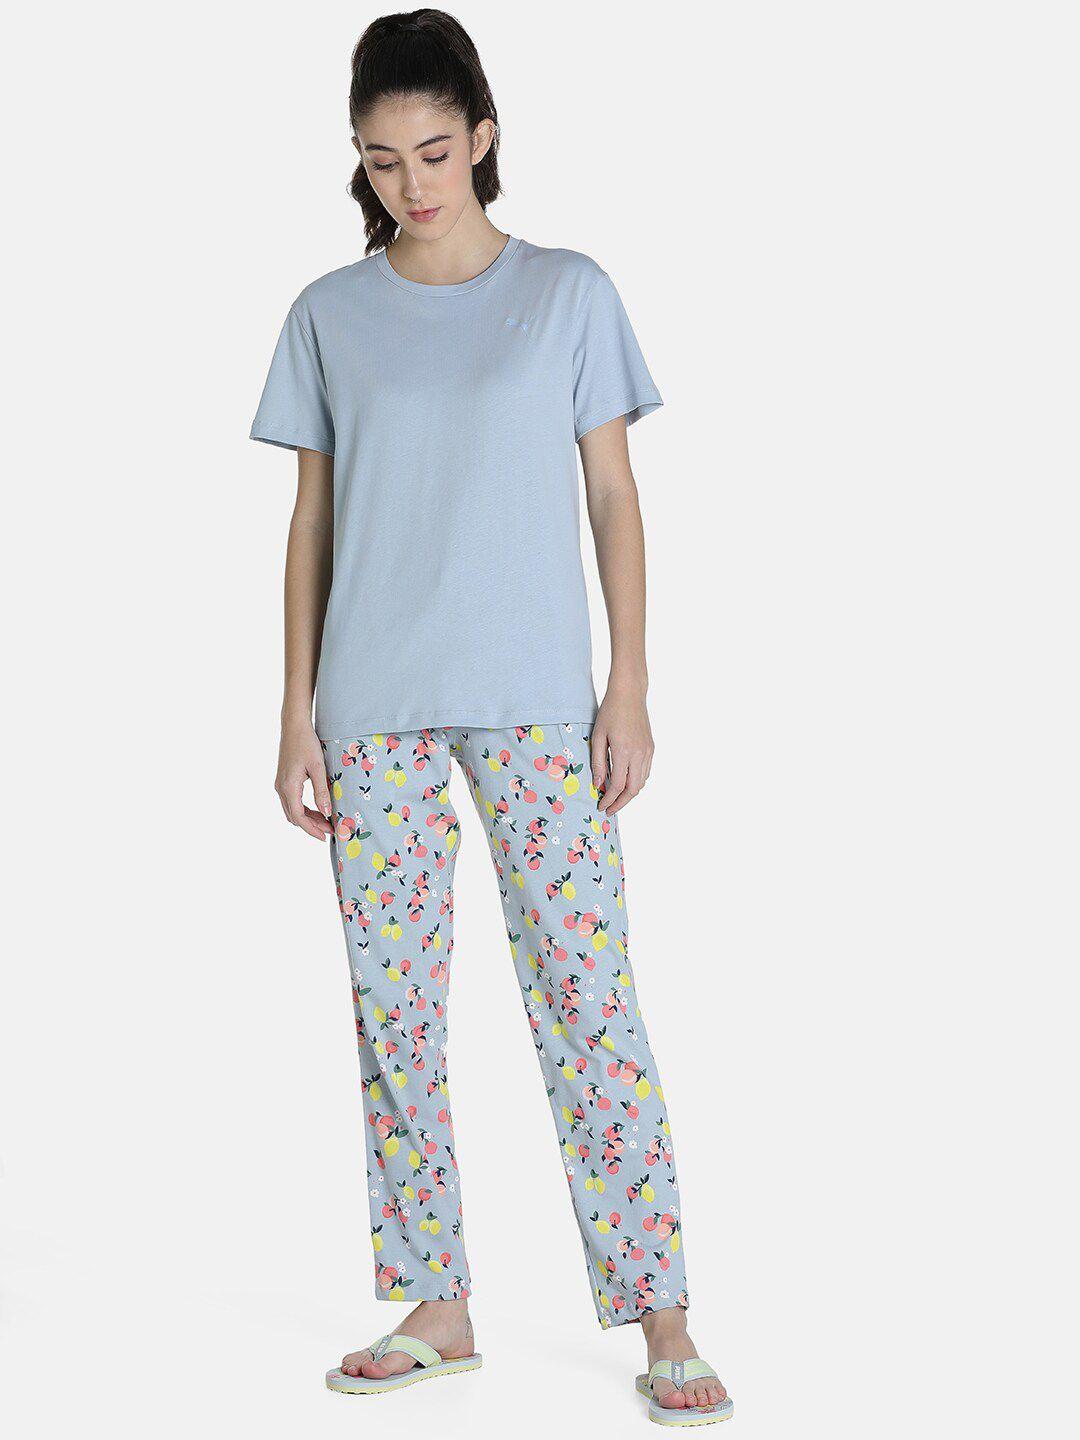 puma-women-regular-fit-t-shirt-&-pyjamas-set